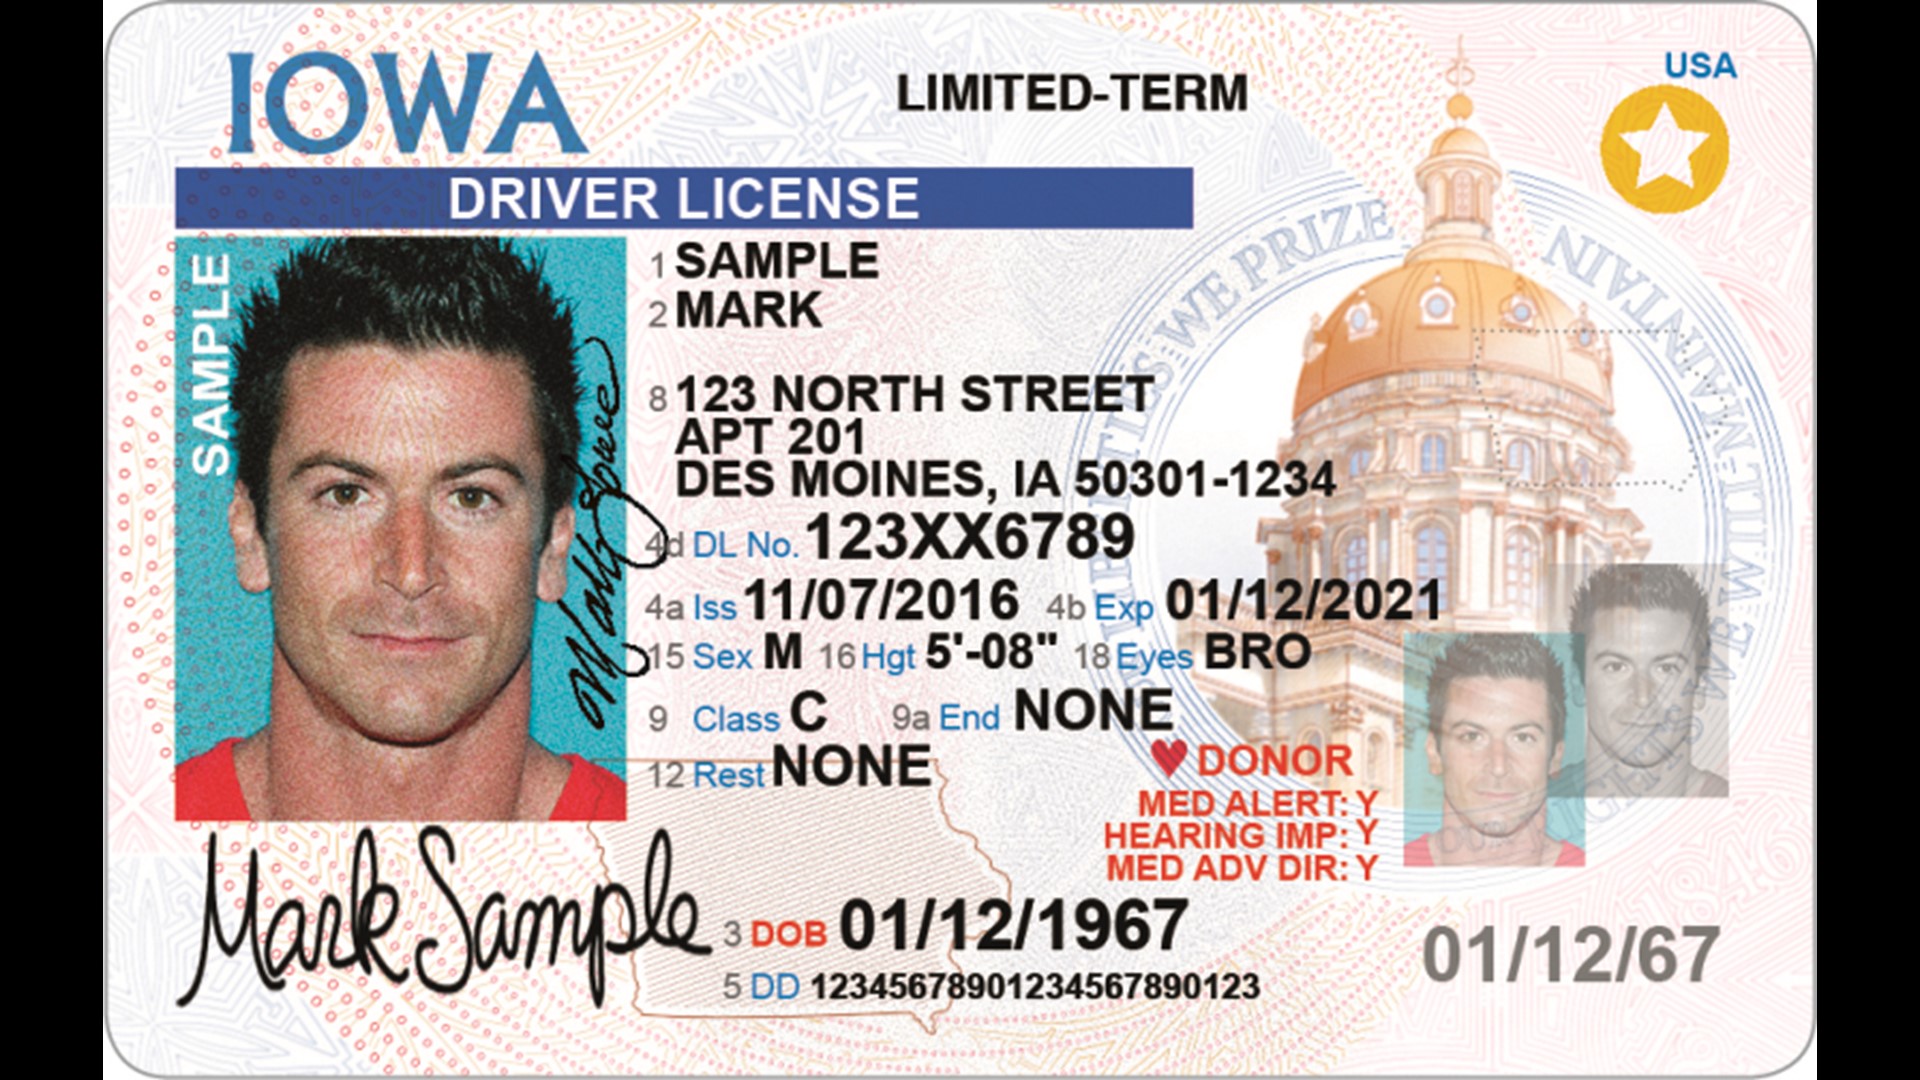 Iowa introduces new look to driver s licenses weareiowa com